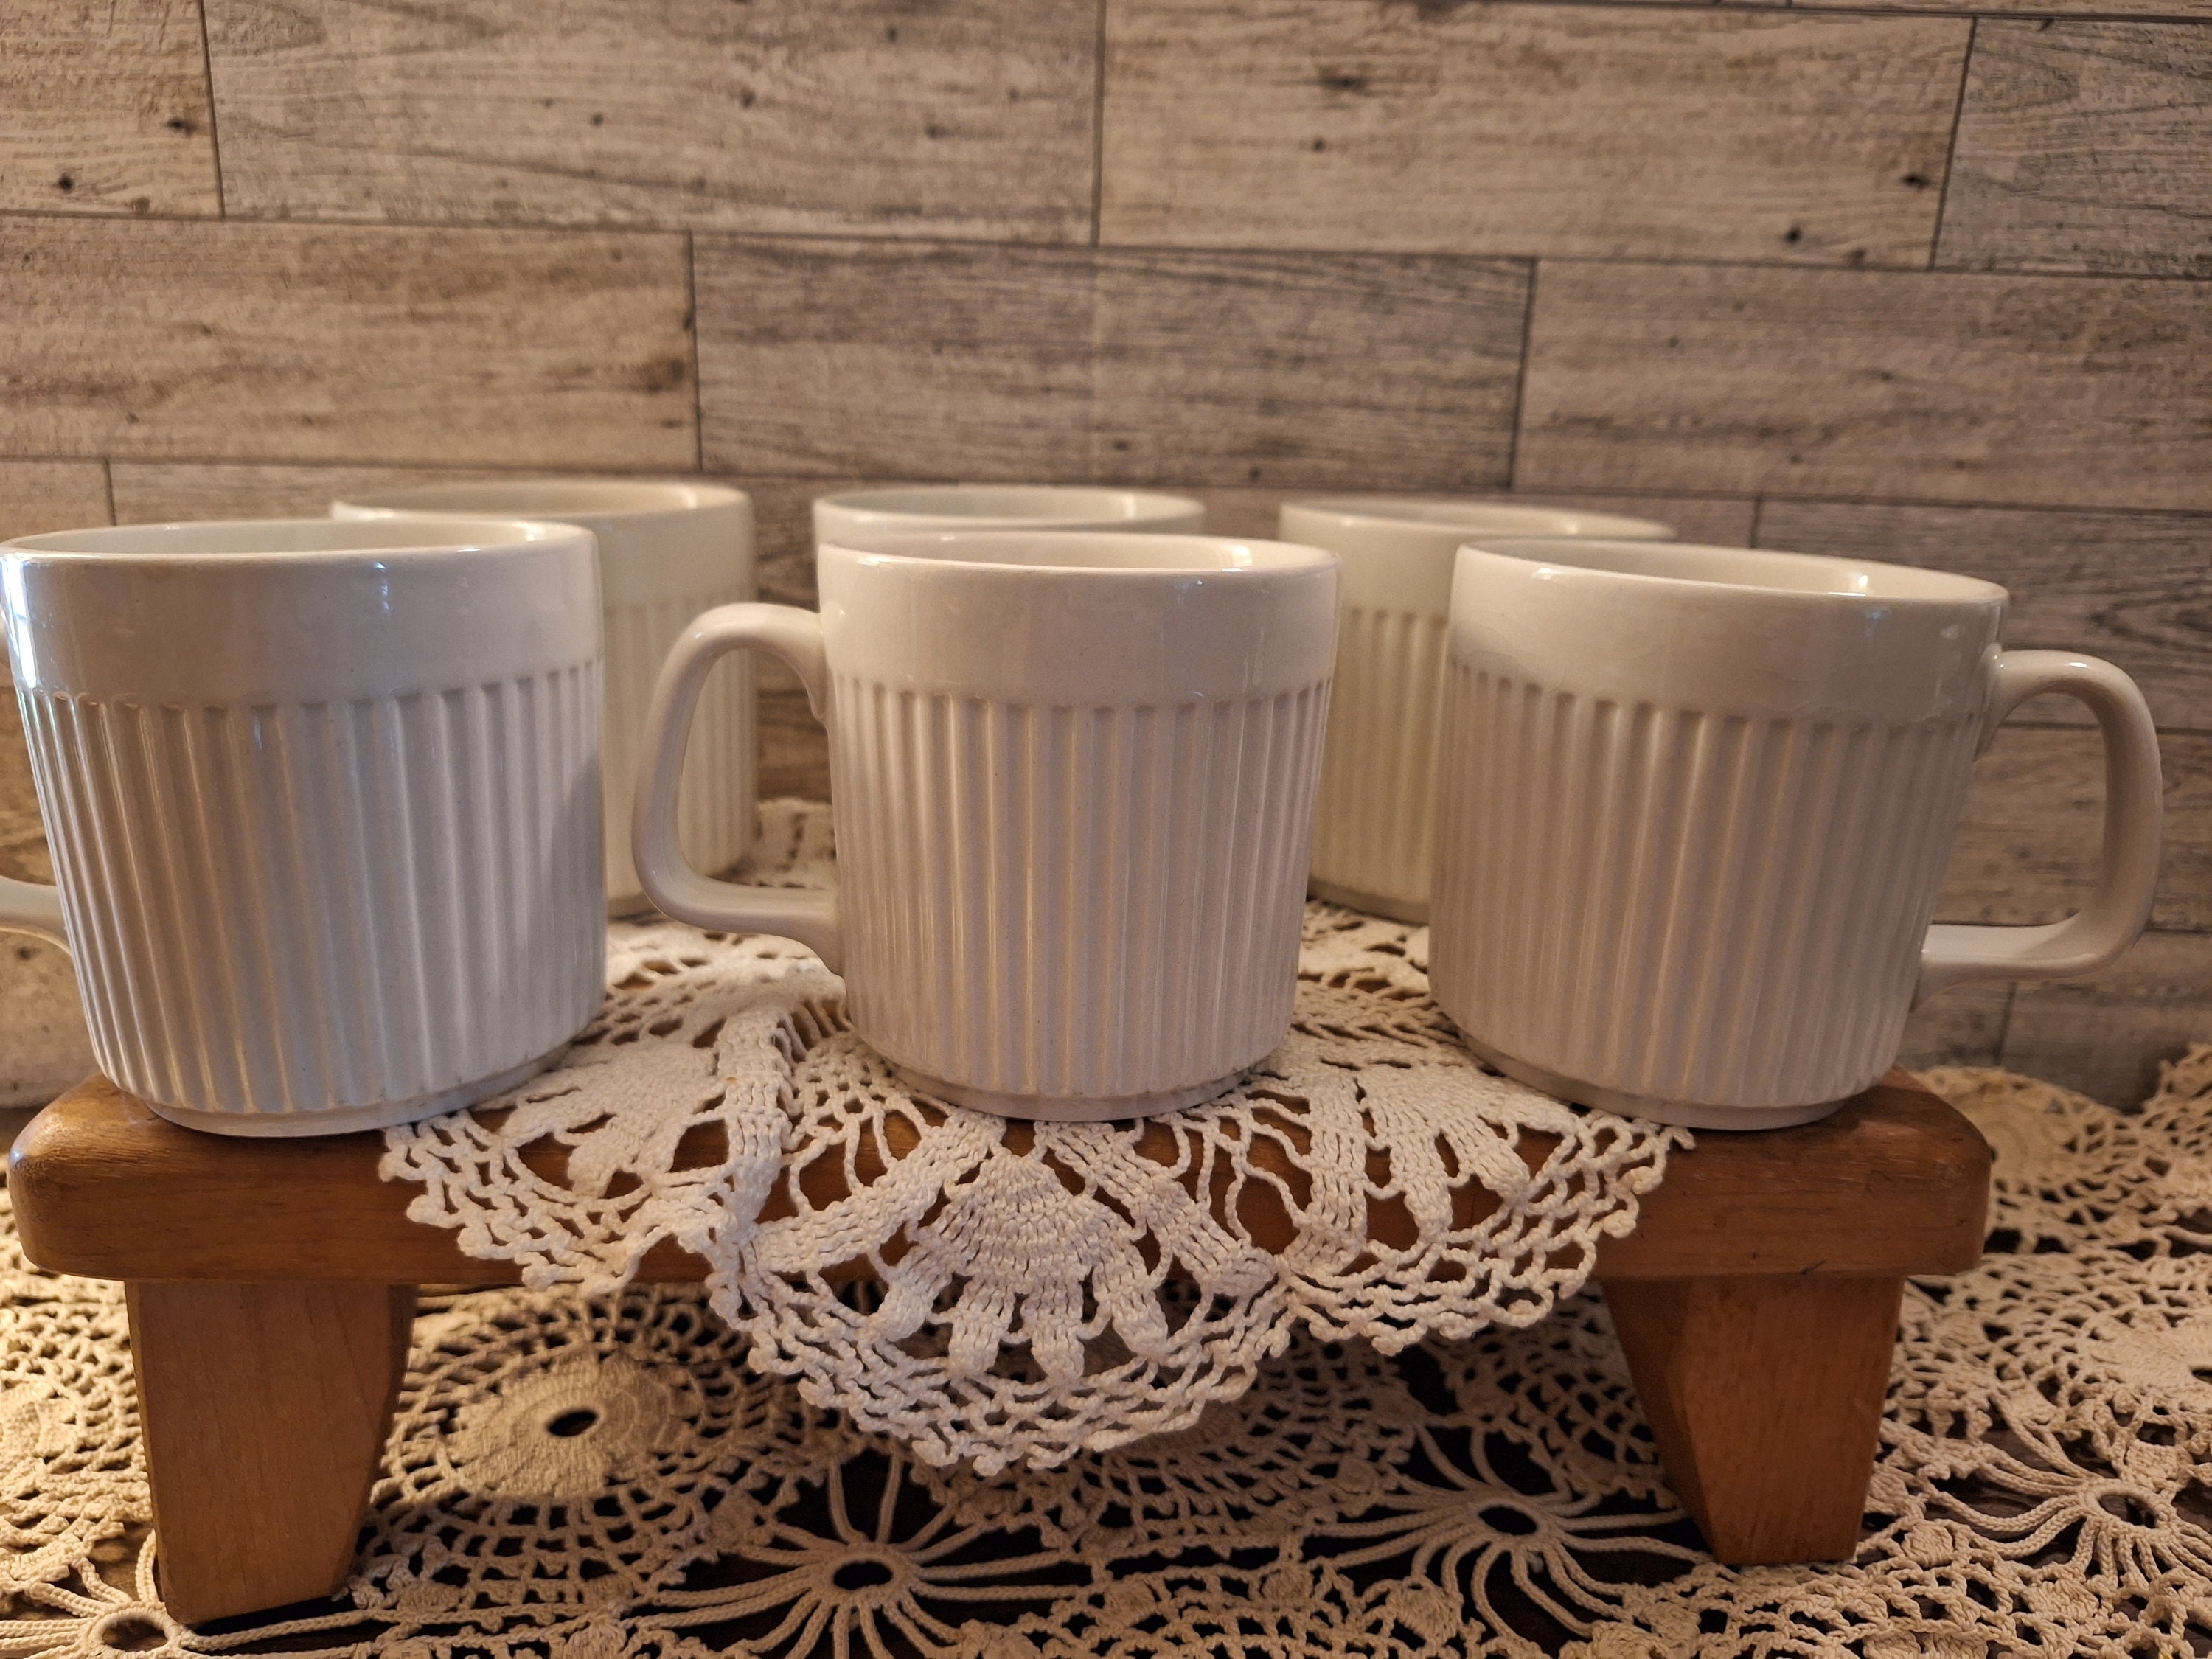 Ceramic Coffee Mugs Set of 6, Gencywe 16oz Coffee Cups with Handle